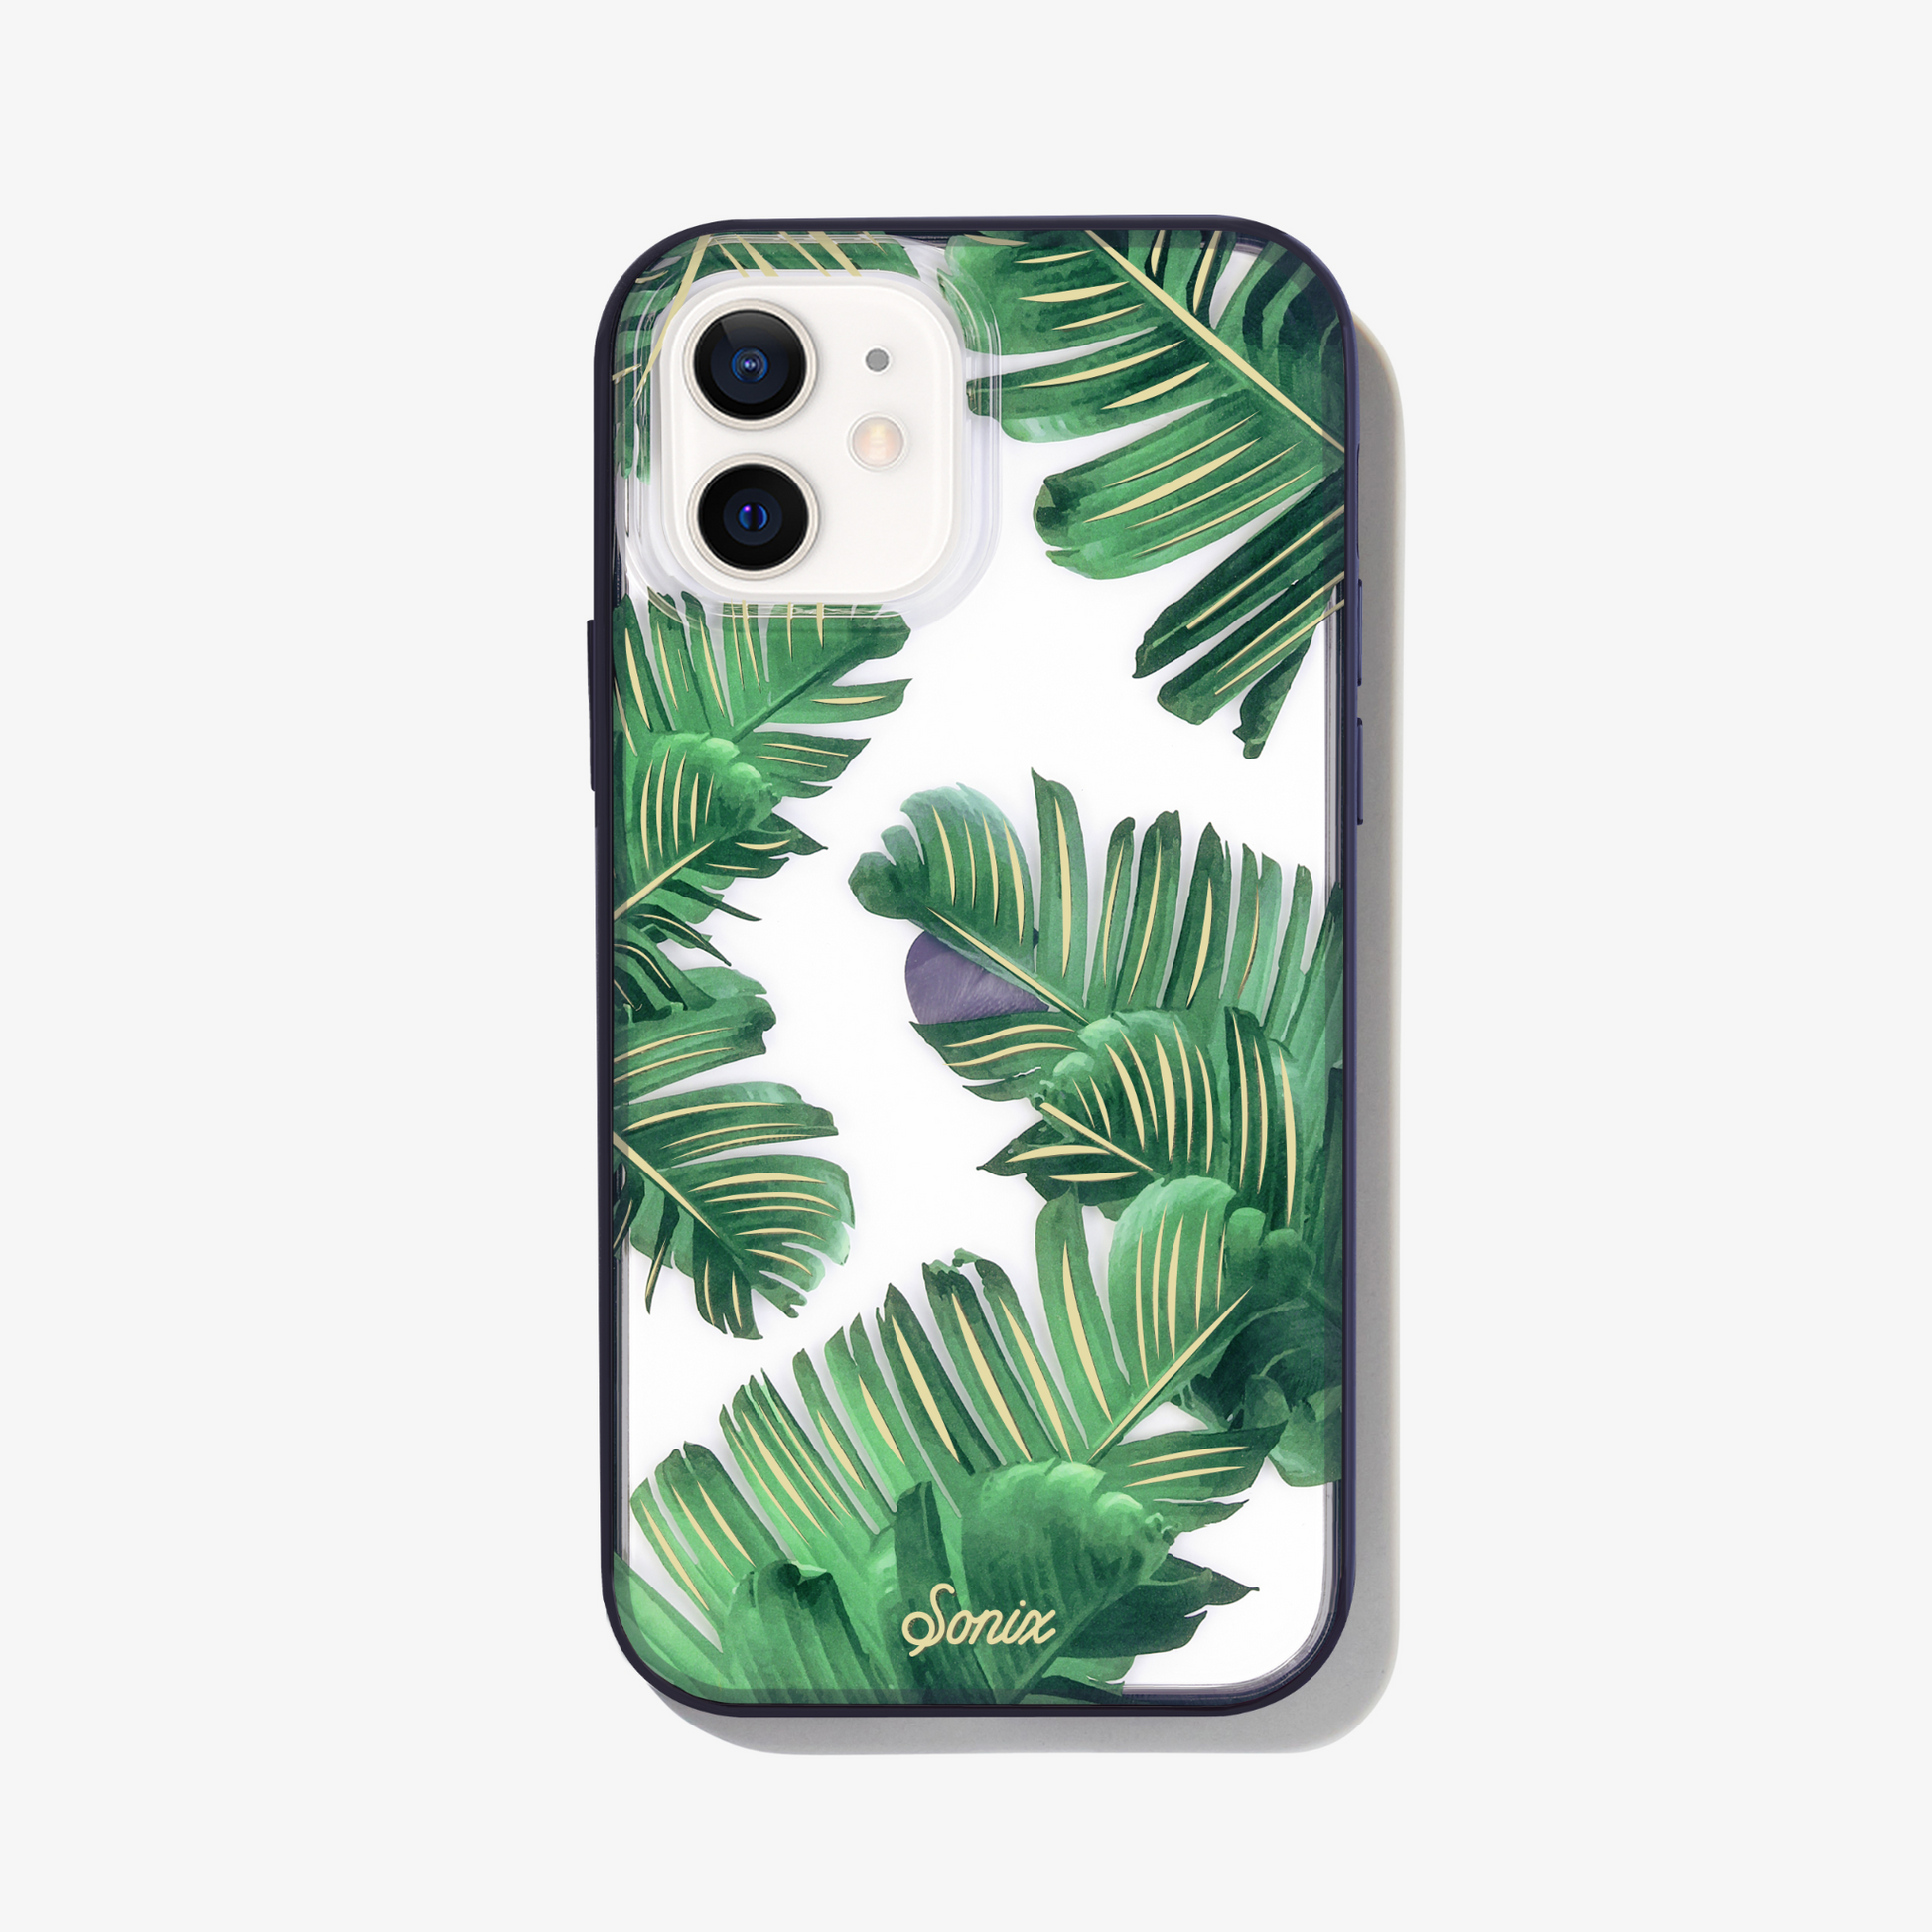 Bahama palm leaves iPhone 12 mini phone case on white phone.